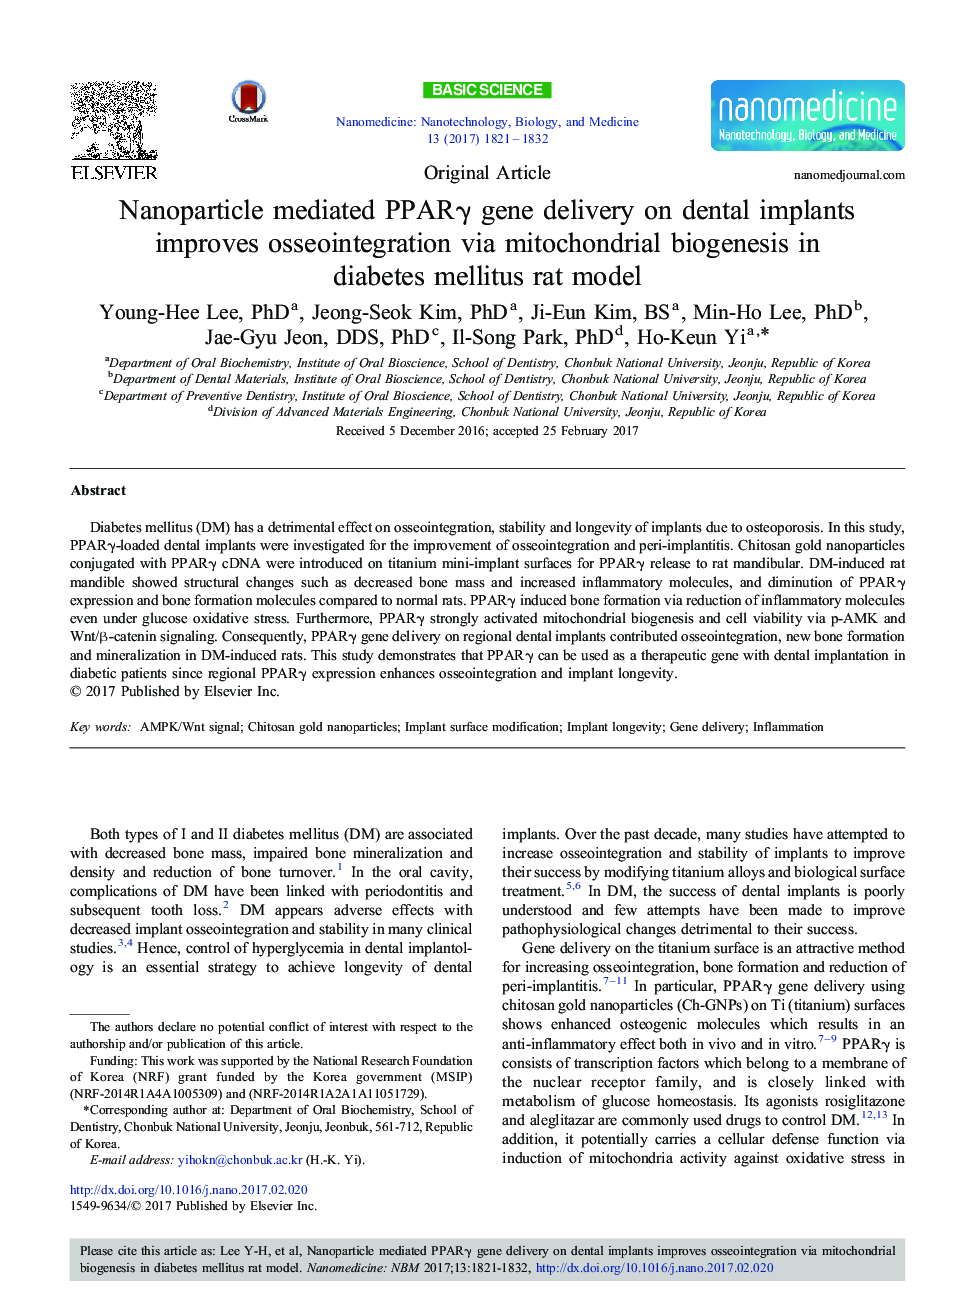 Original ArticleNanoparticle mediated PPARÎ³ gene delivery on dental implants improves osseointegration via mitochondrial biogenesis in diabetes mellitus rat model